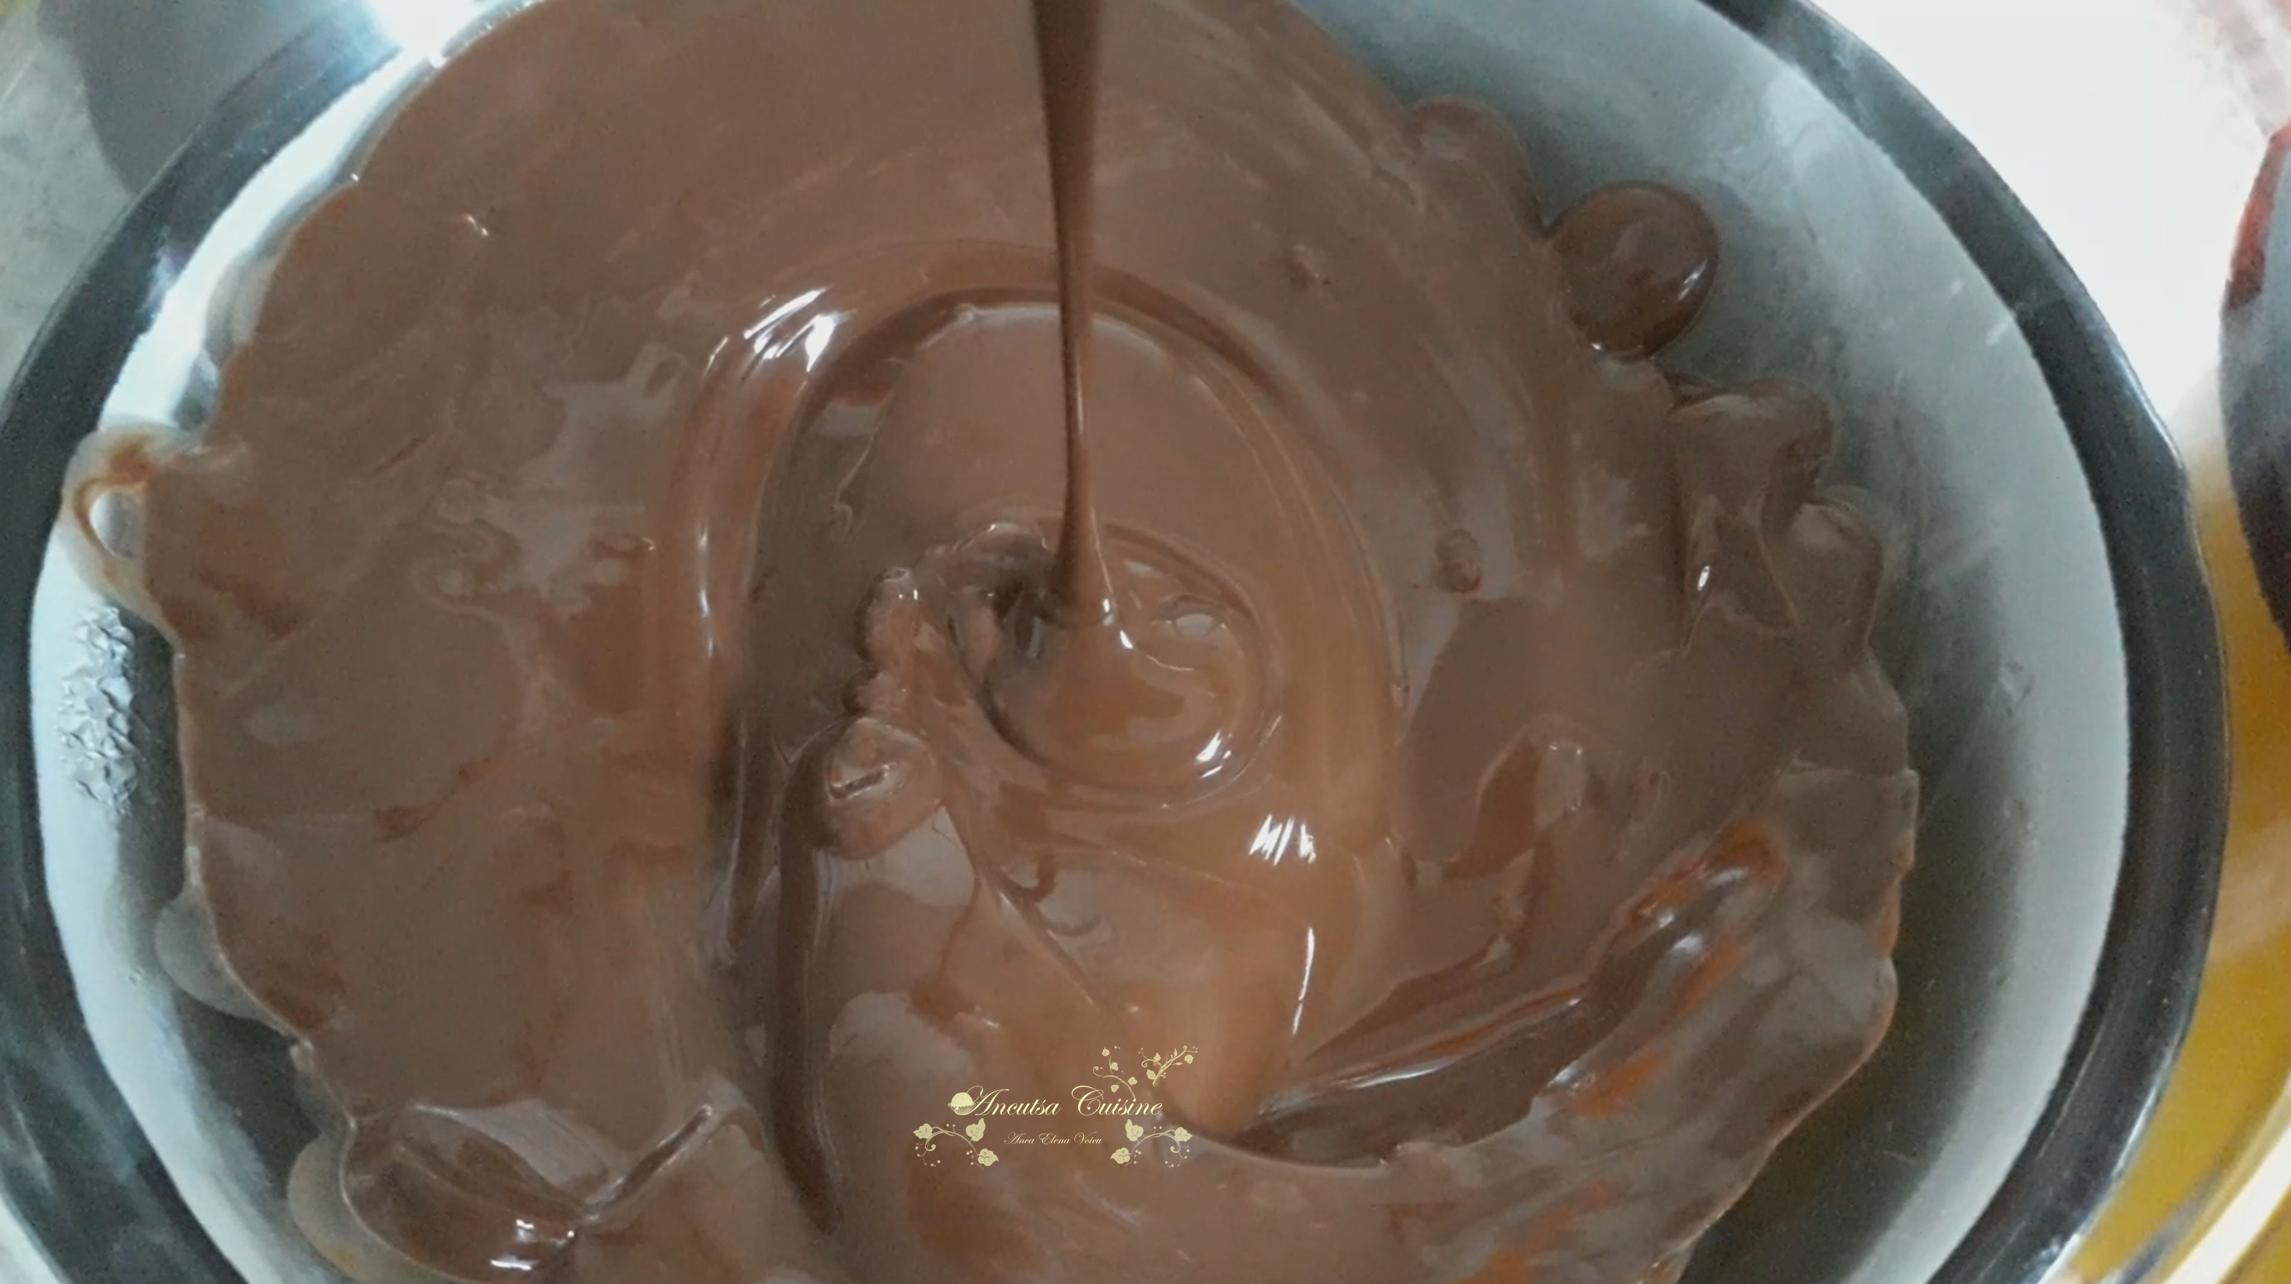 Desert sfere de ciocolata, umplute, pentru cacao calda